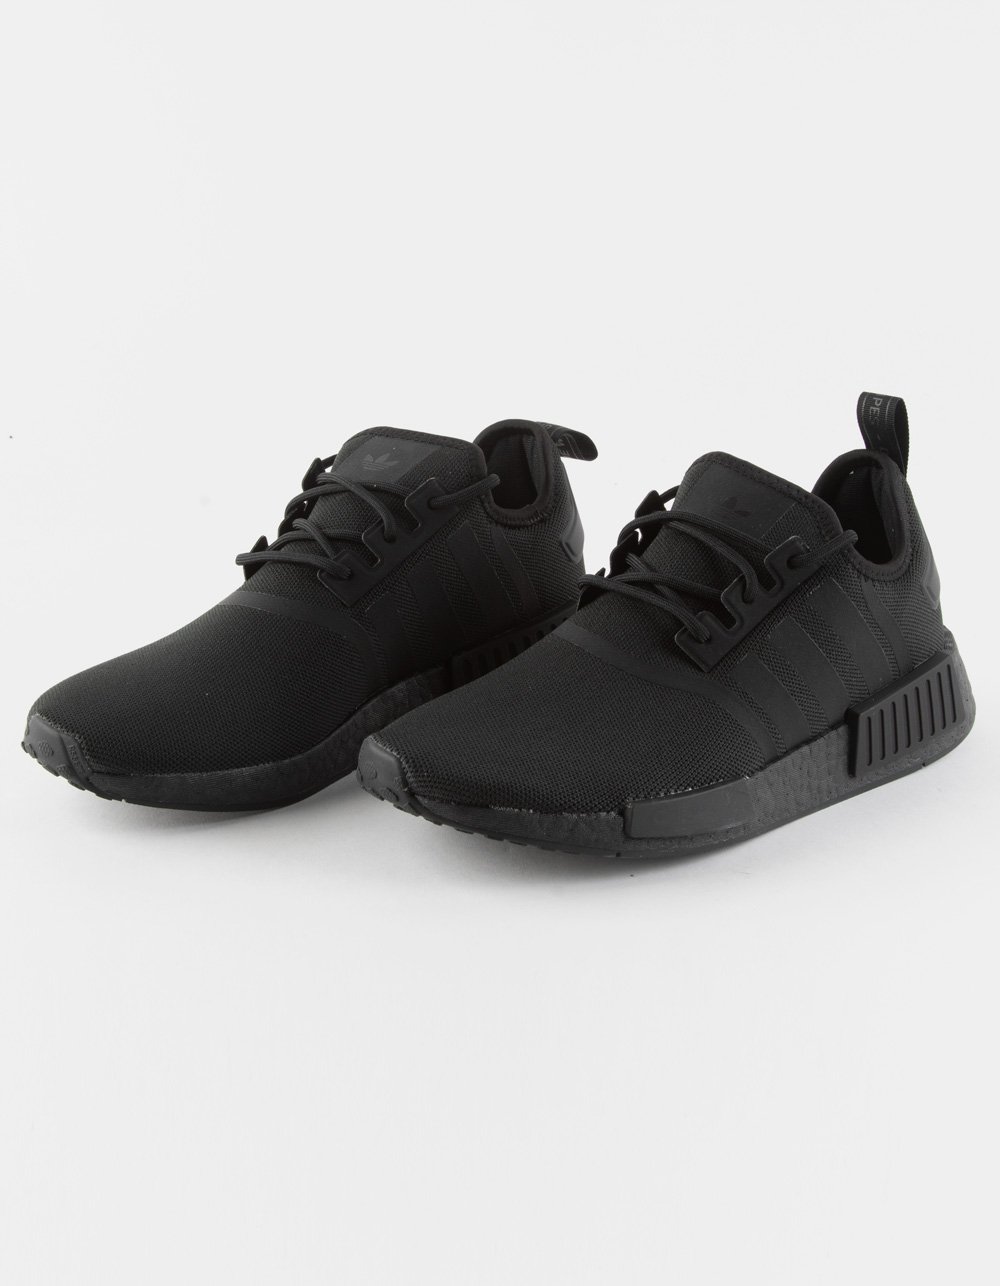 adidas shoes for men black